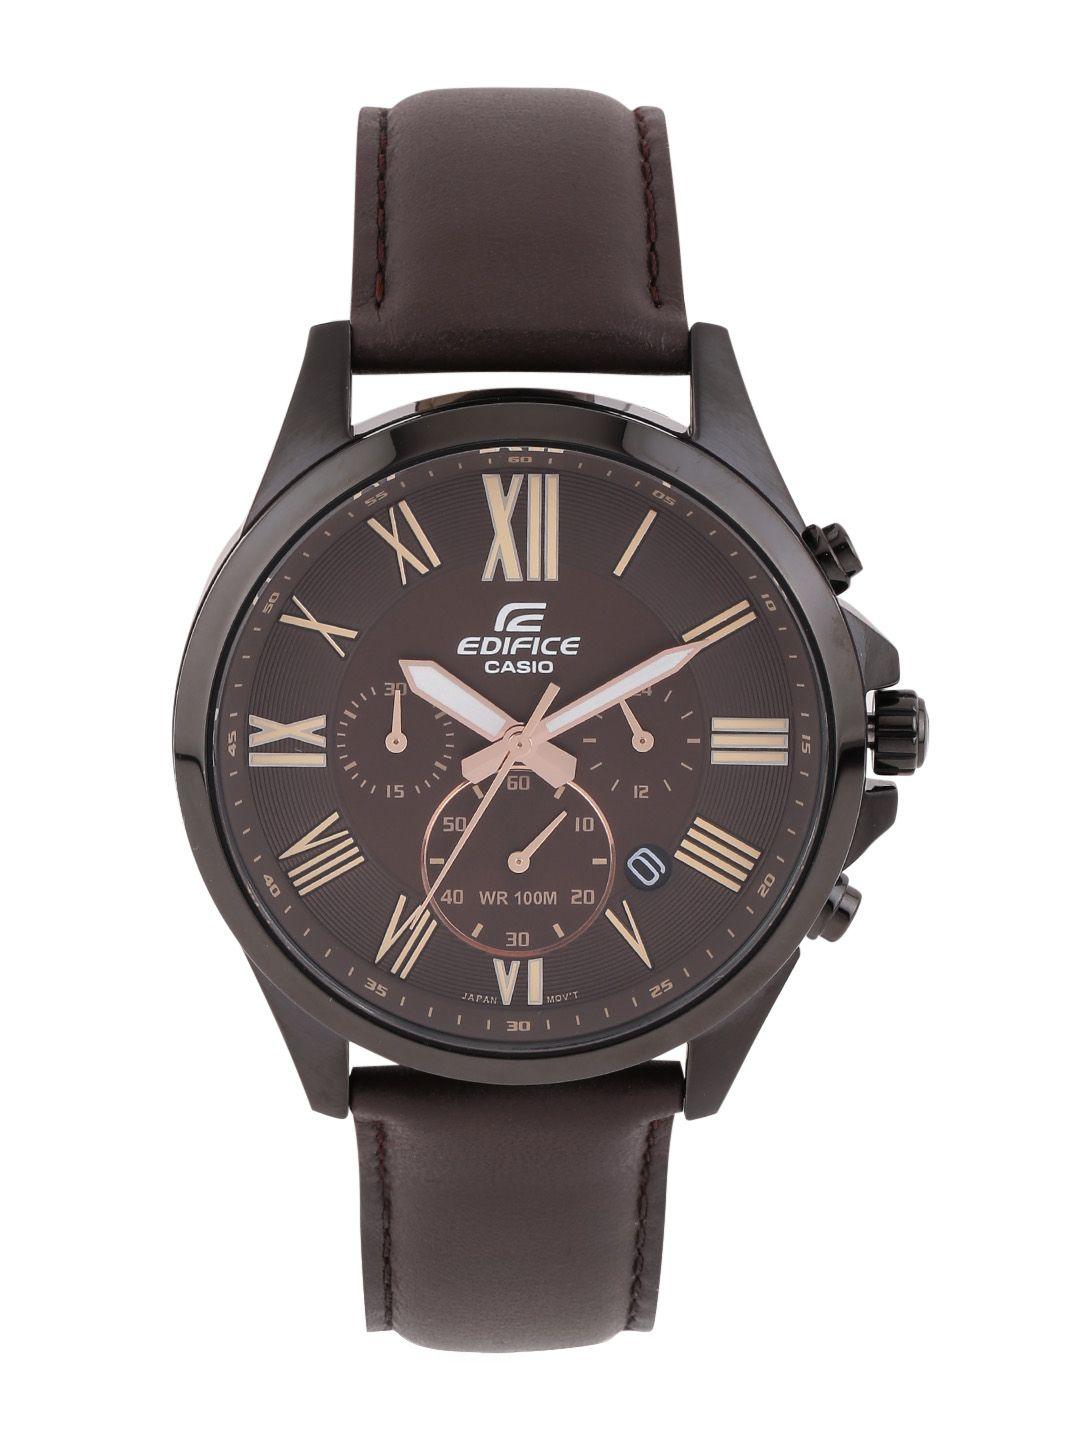 casio-edifice-men-coffee-brown-analogue-watch-ex316-efv-500bl-1avudf